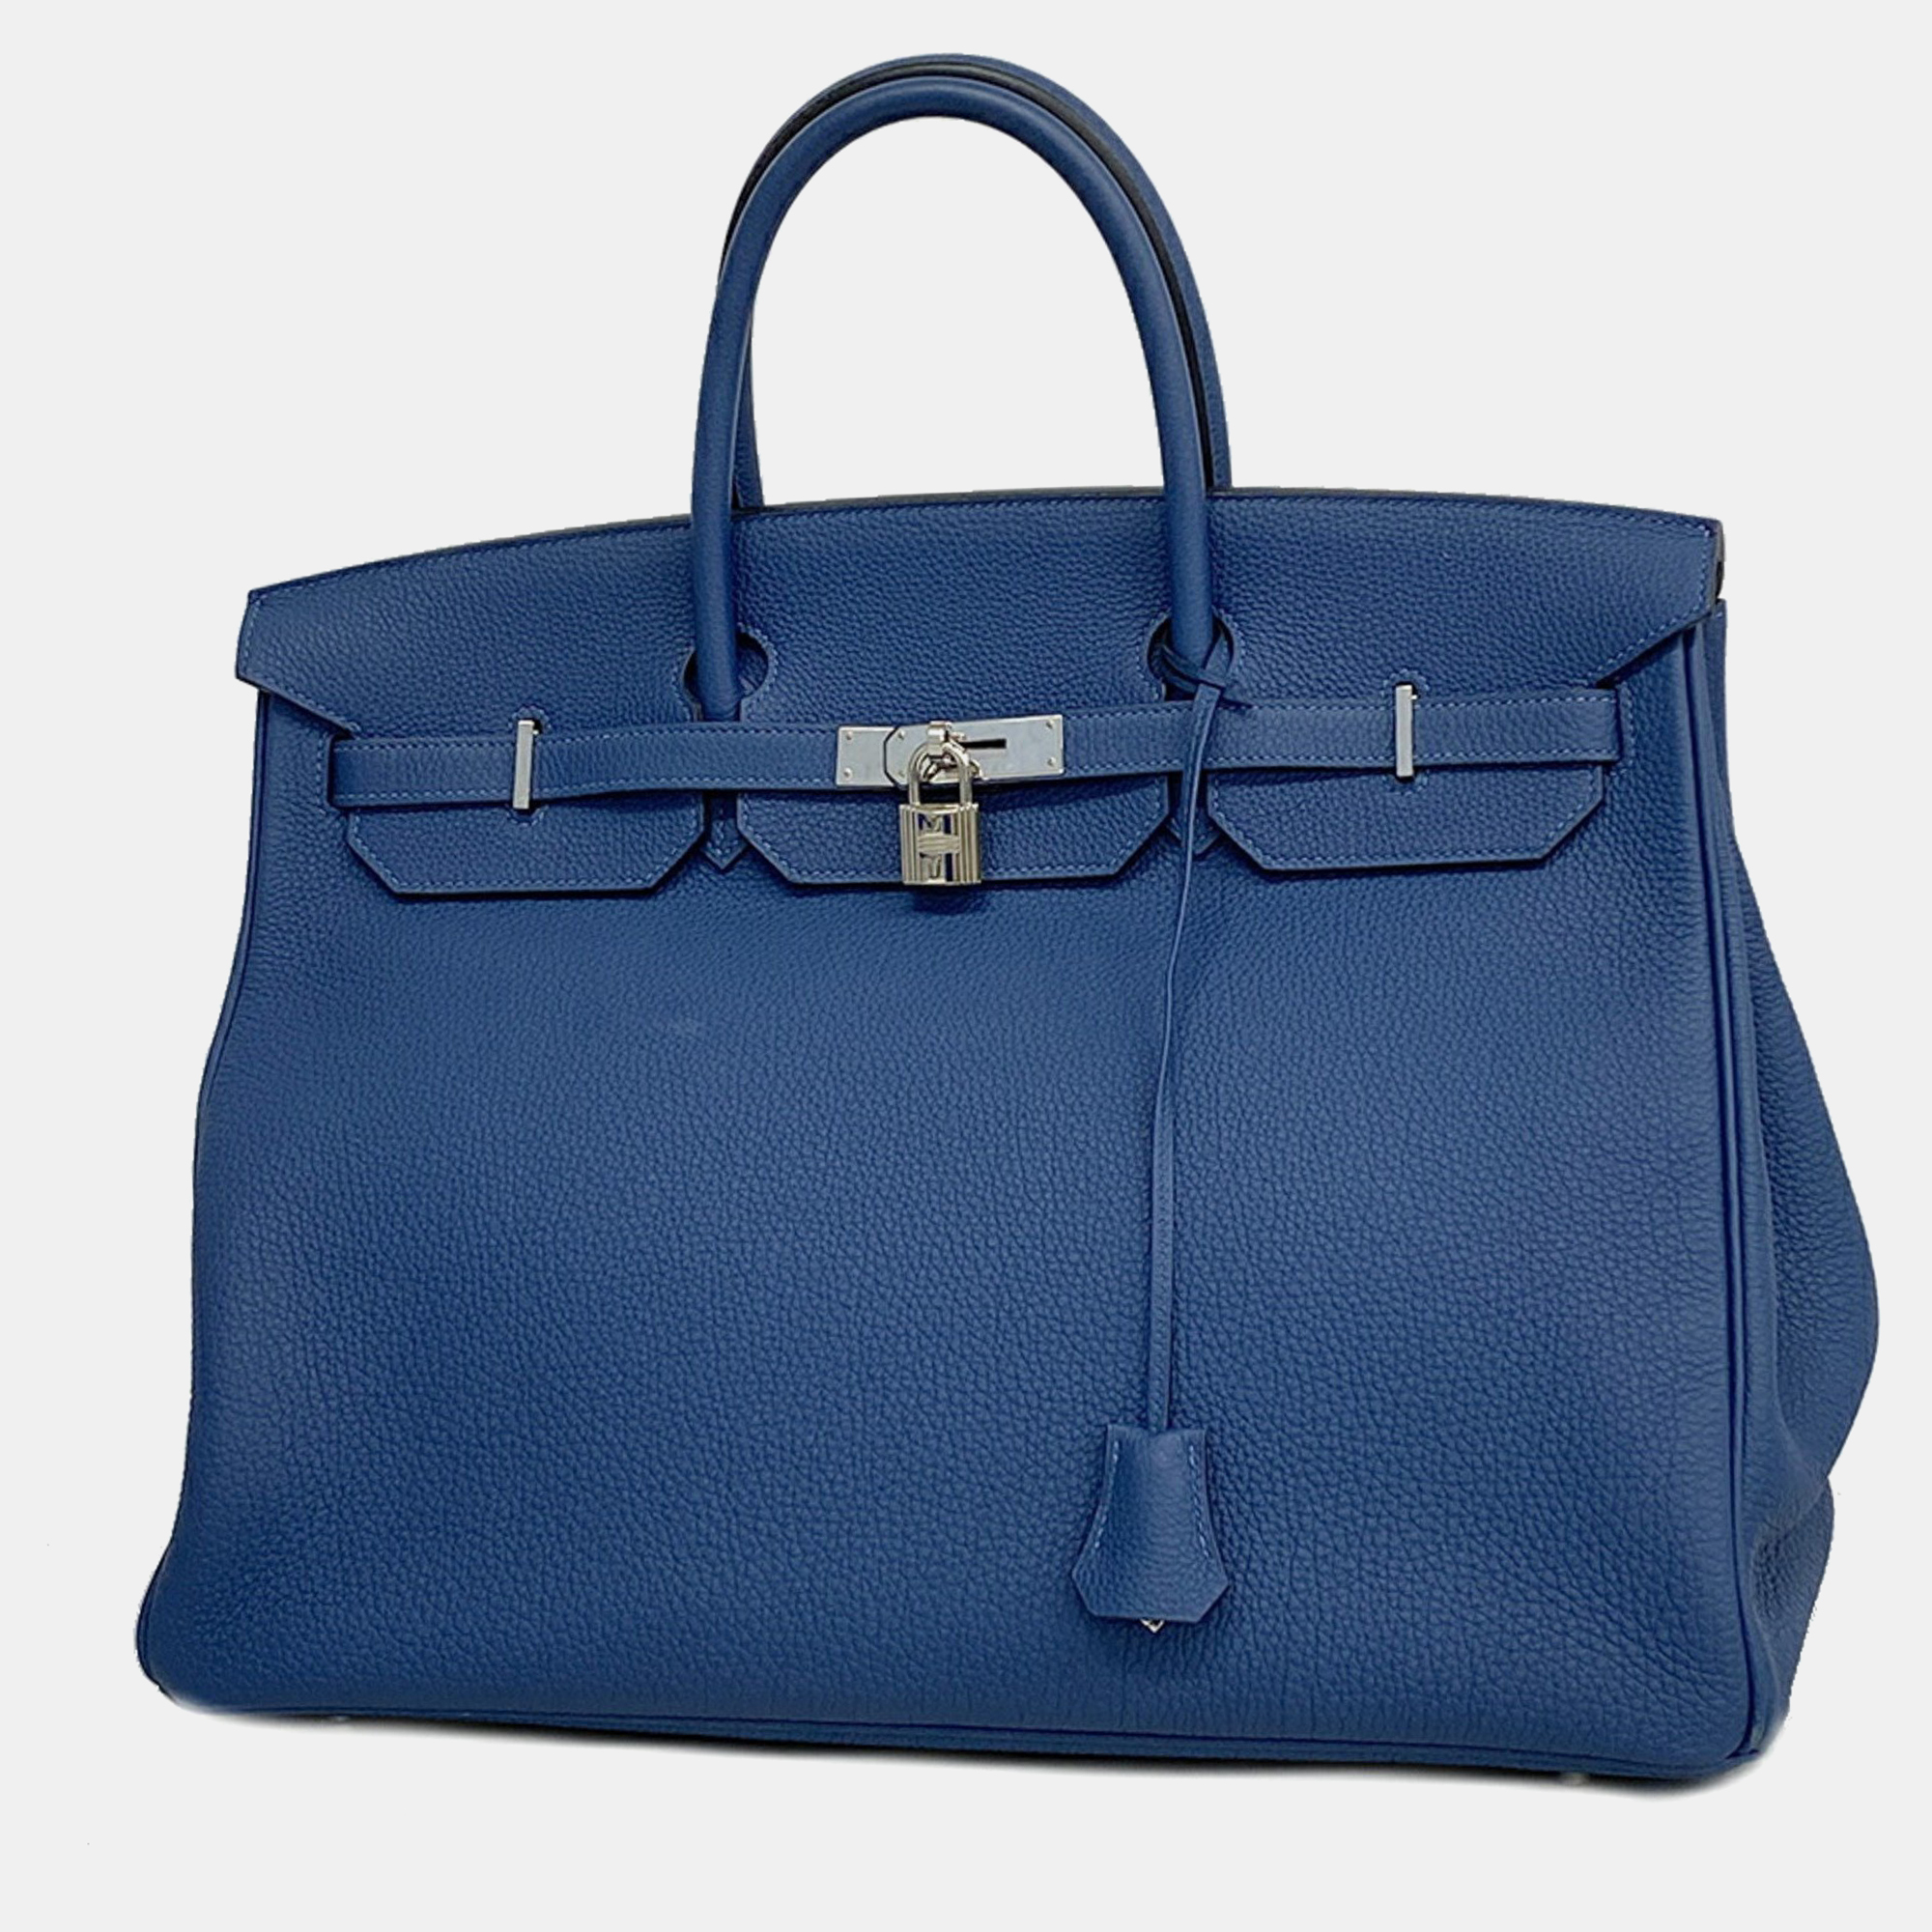 

Hermes Blue de Malte Togo Birkin Engraved Handbag